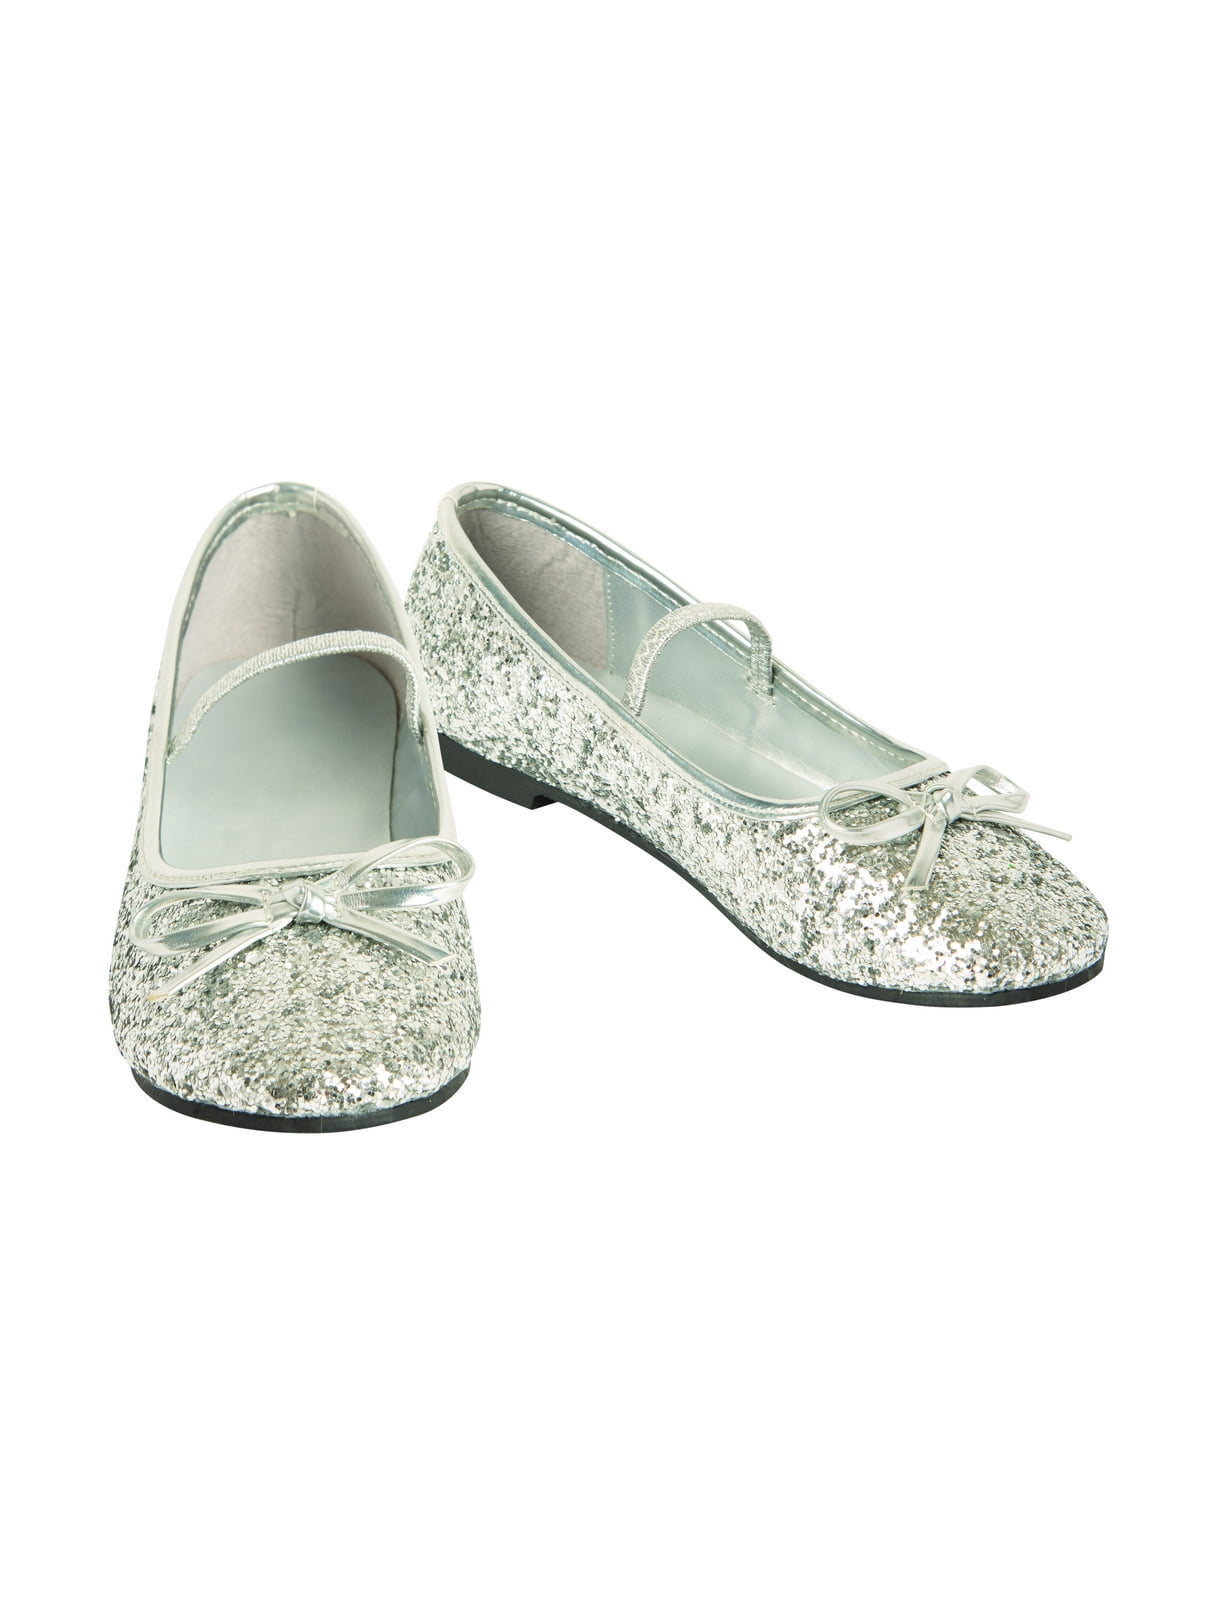 silver shoes at walmart